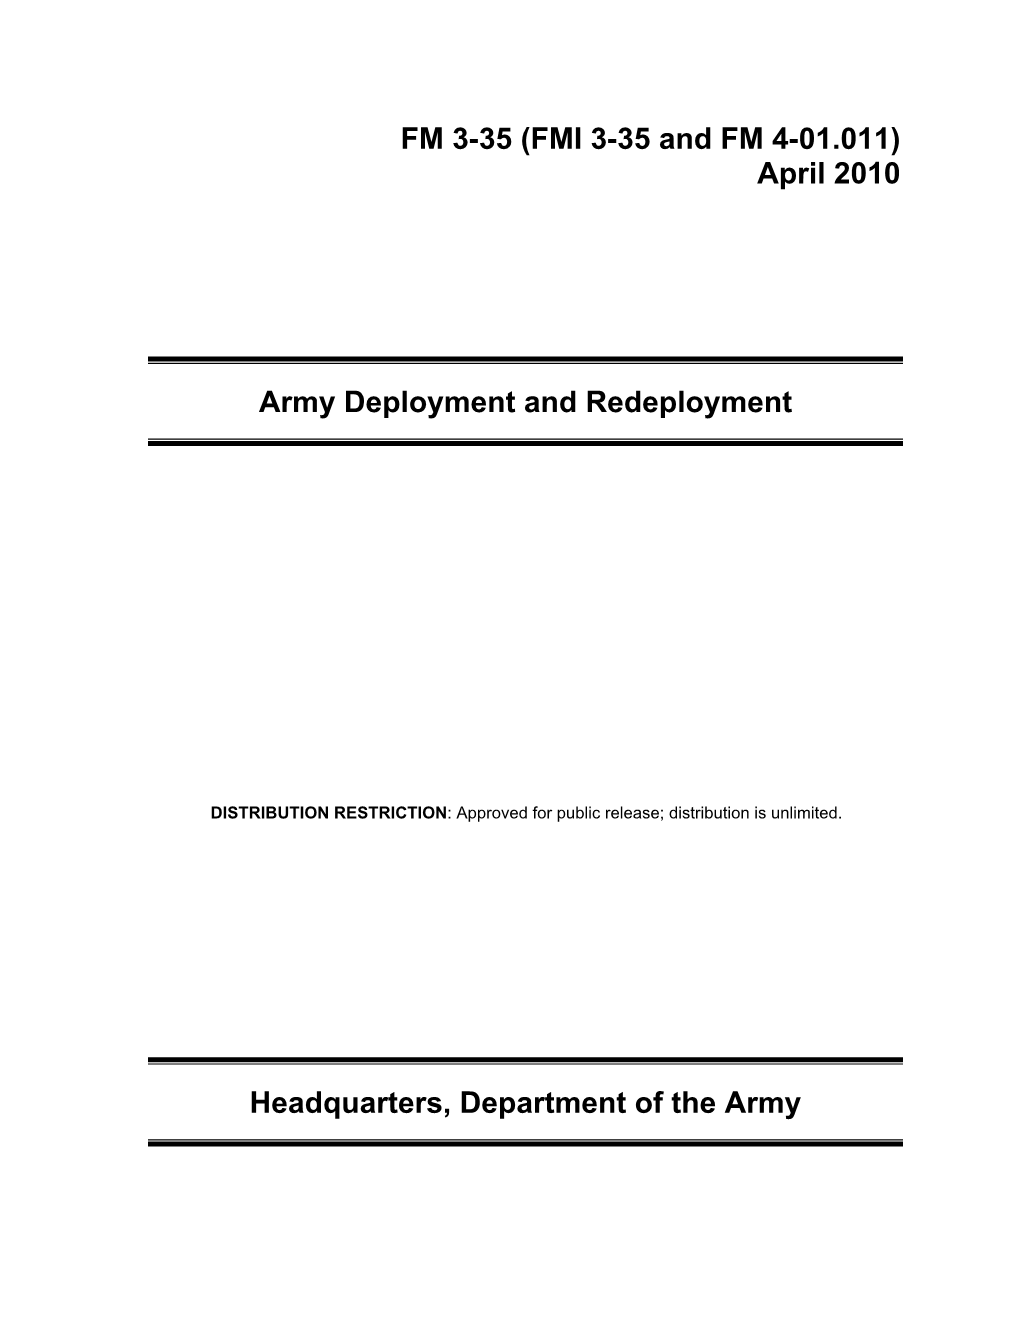 FM 3-35: Army Deployment and Redeployment